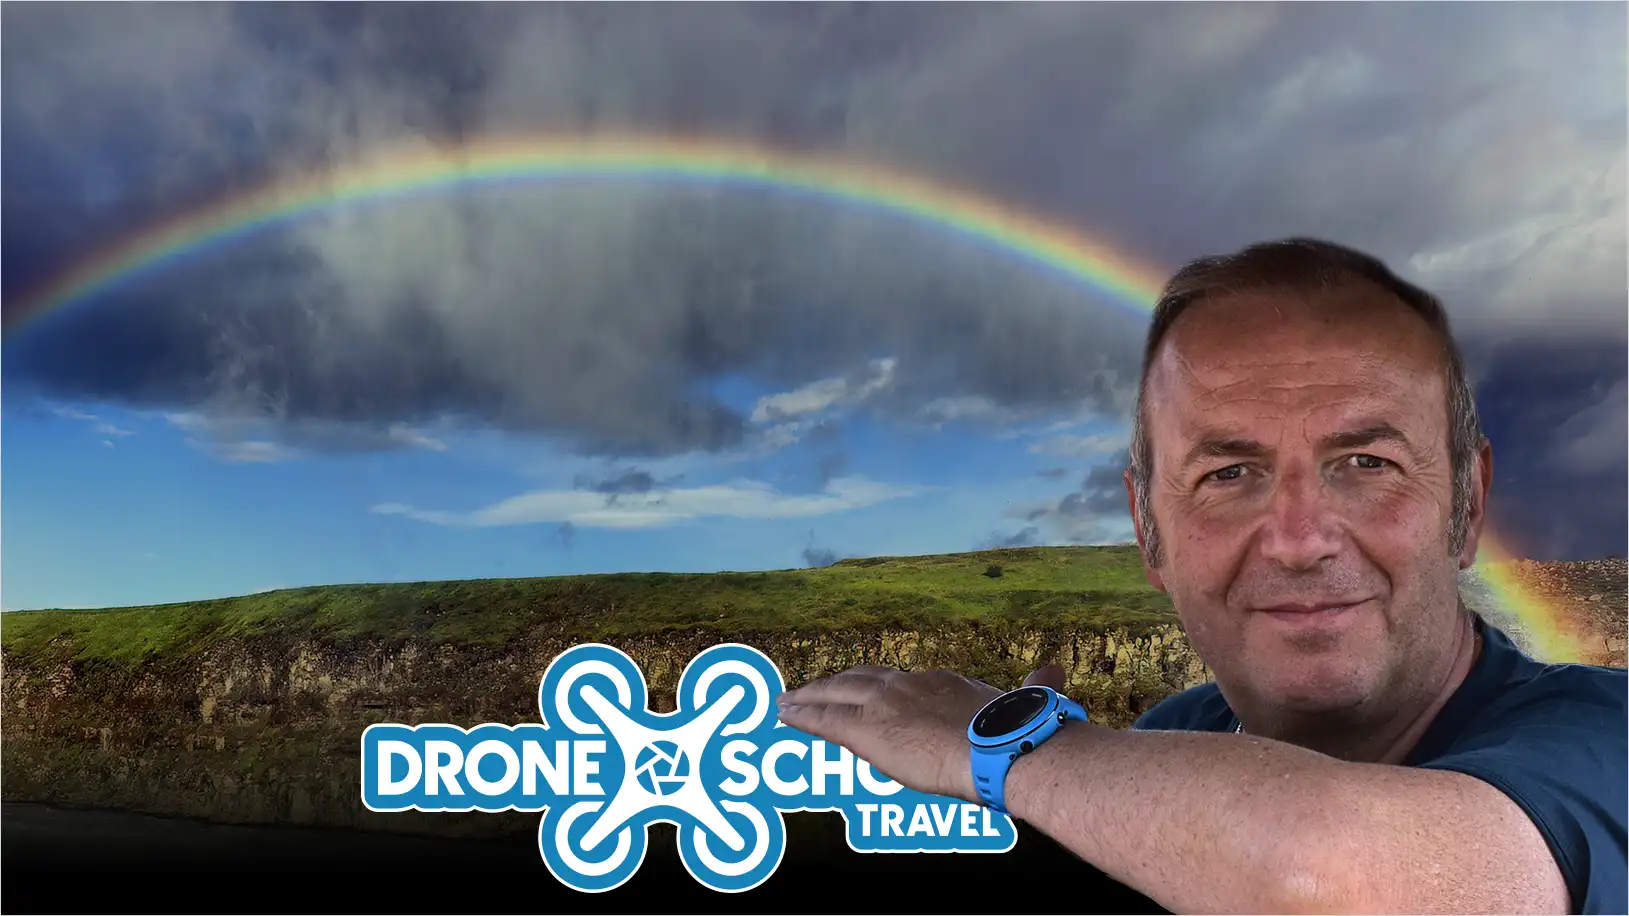 Drone School Travel